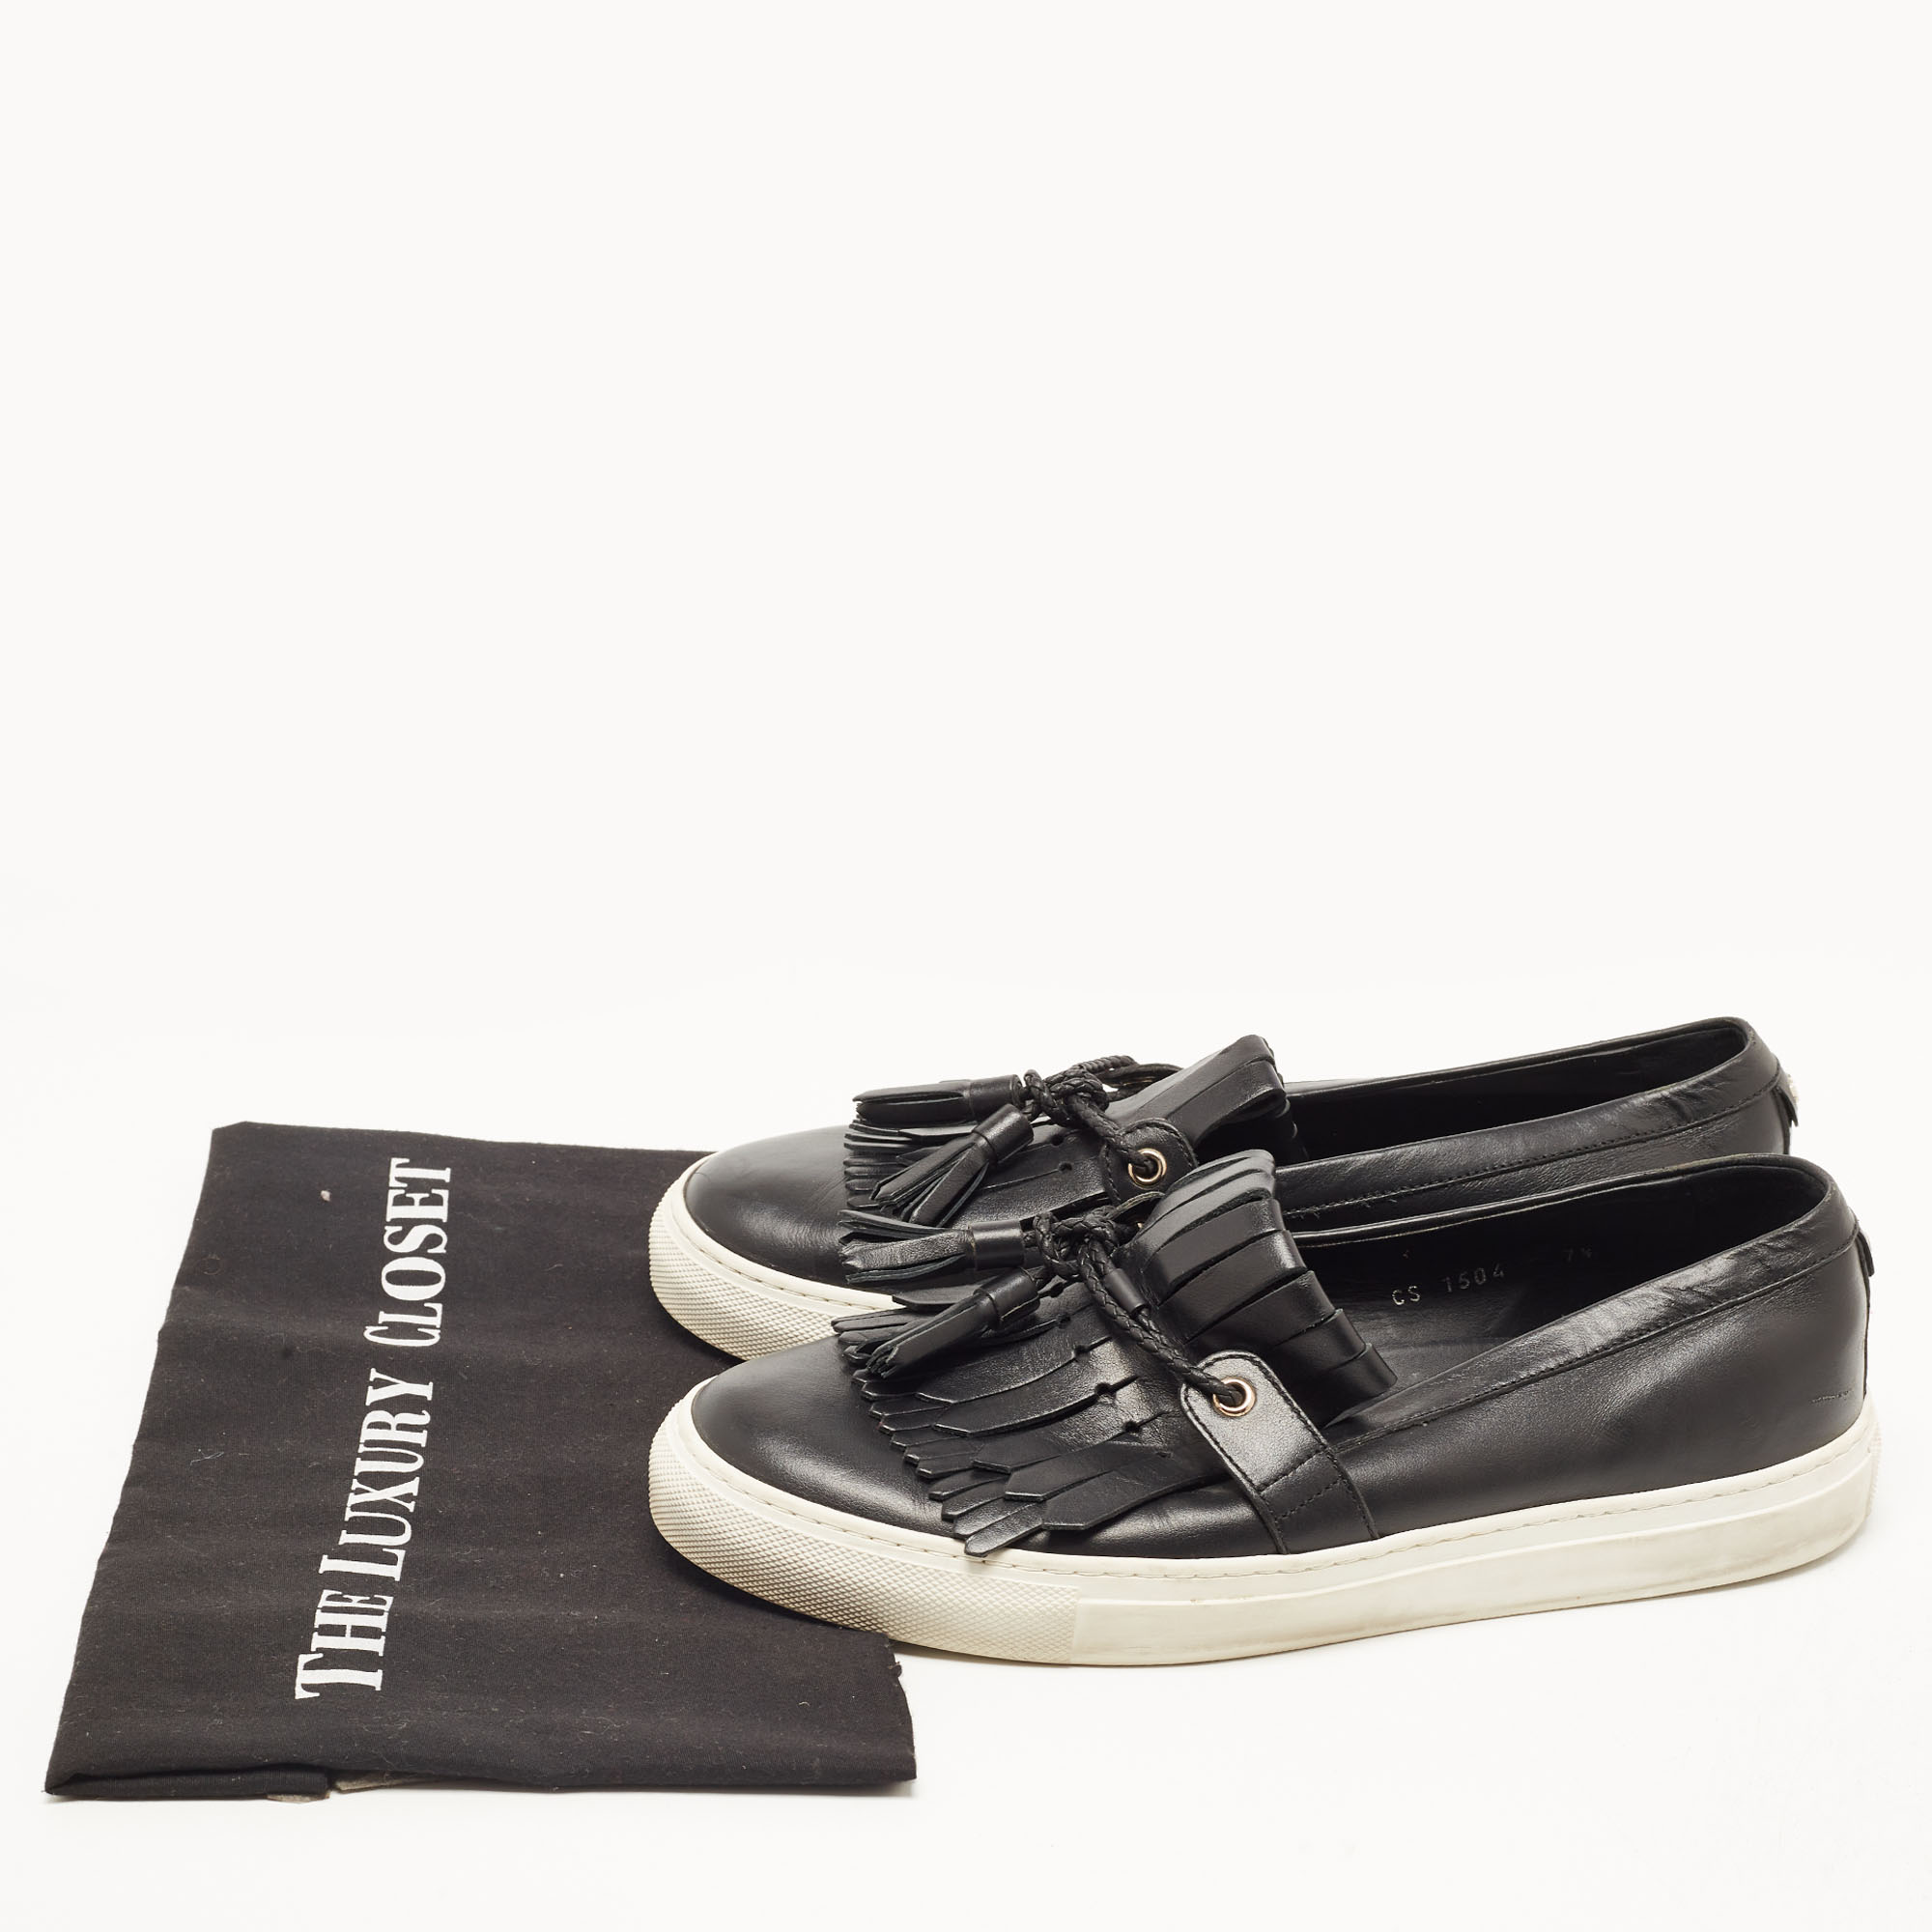 Dolce & Gabbana Black Leather Fringe Slip On Sneakers Size 41.5